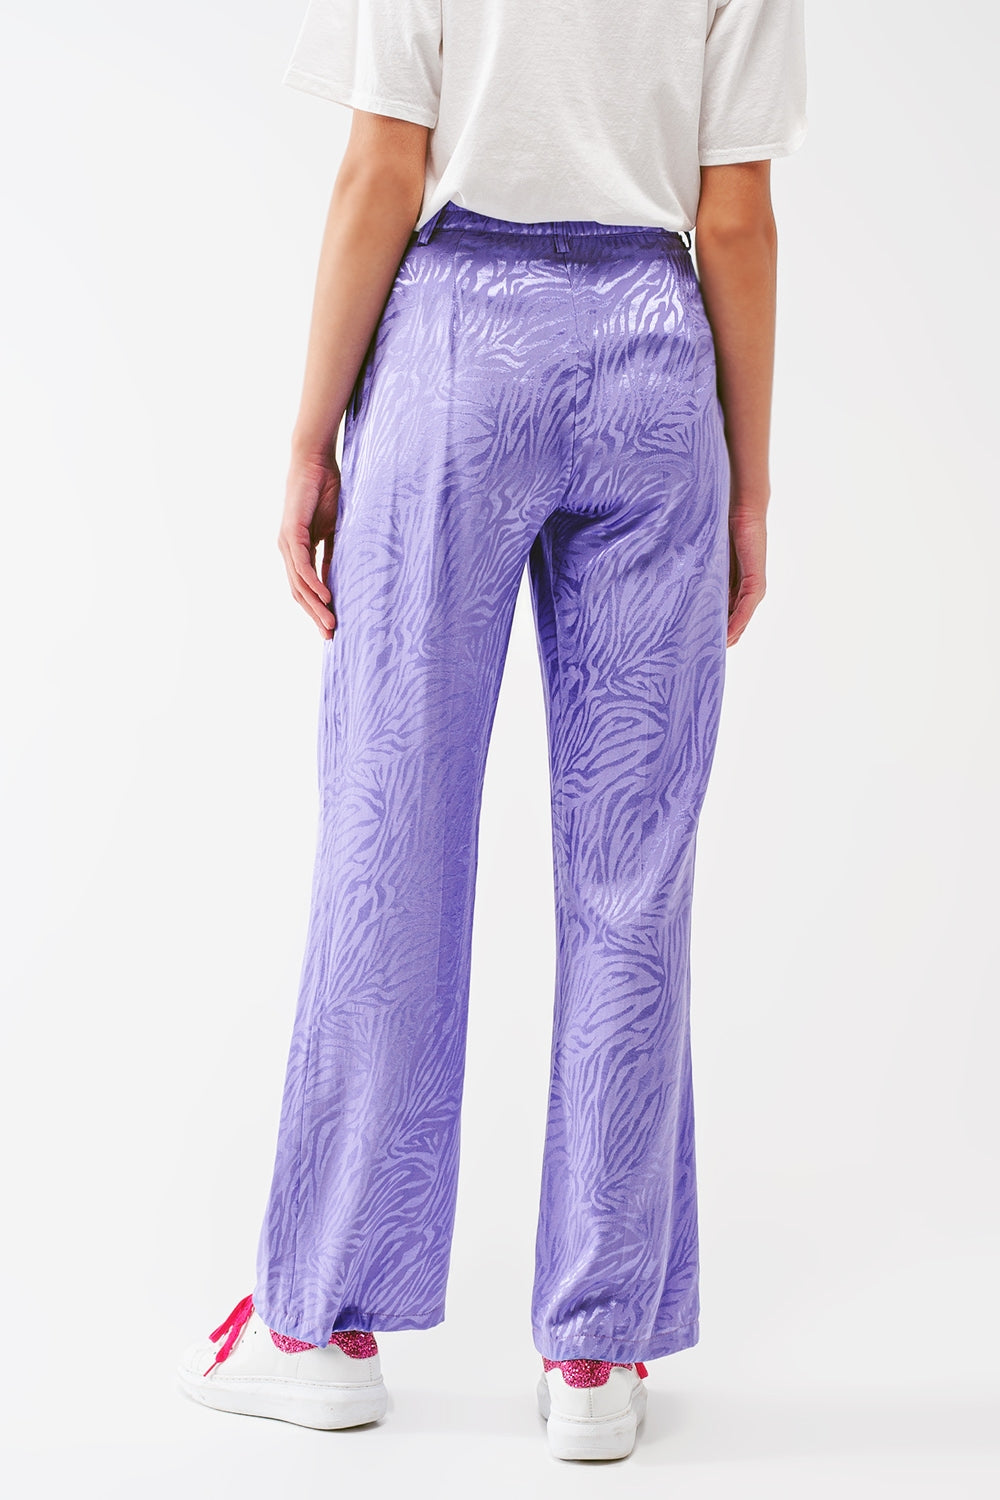 Loose Fit Zebra Print Pants in purple - Szua Store